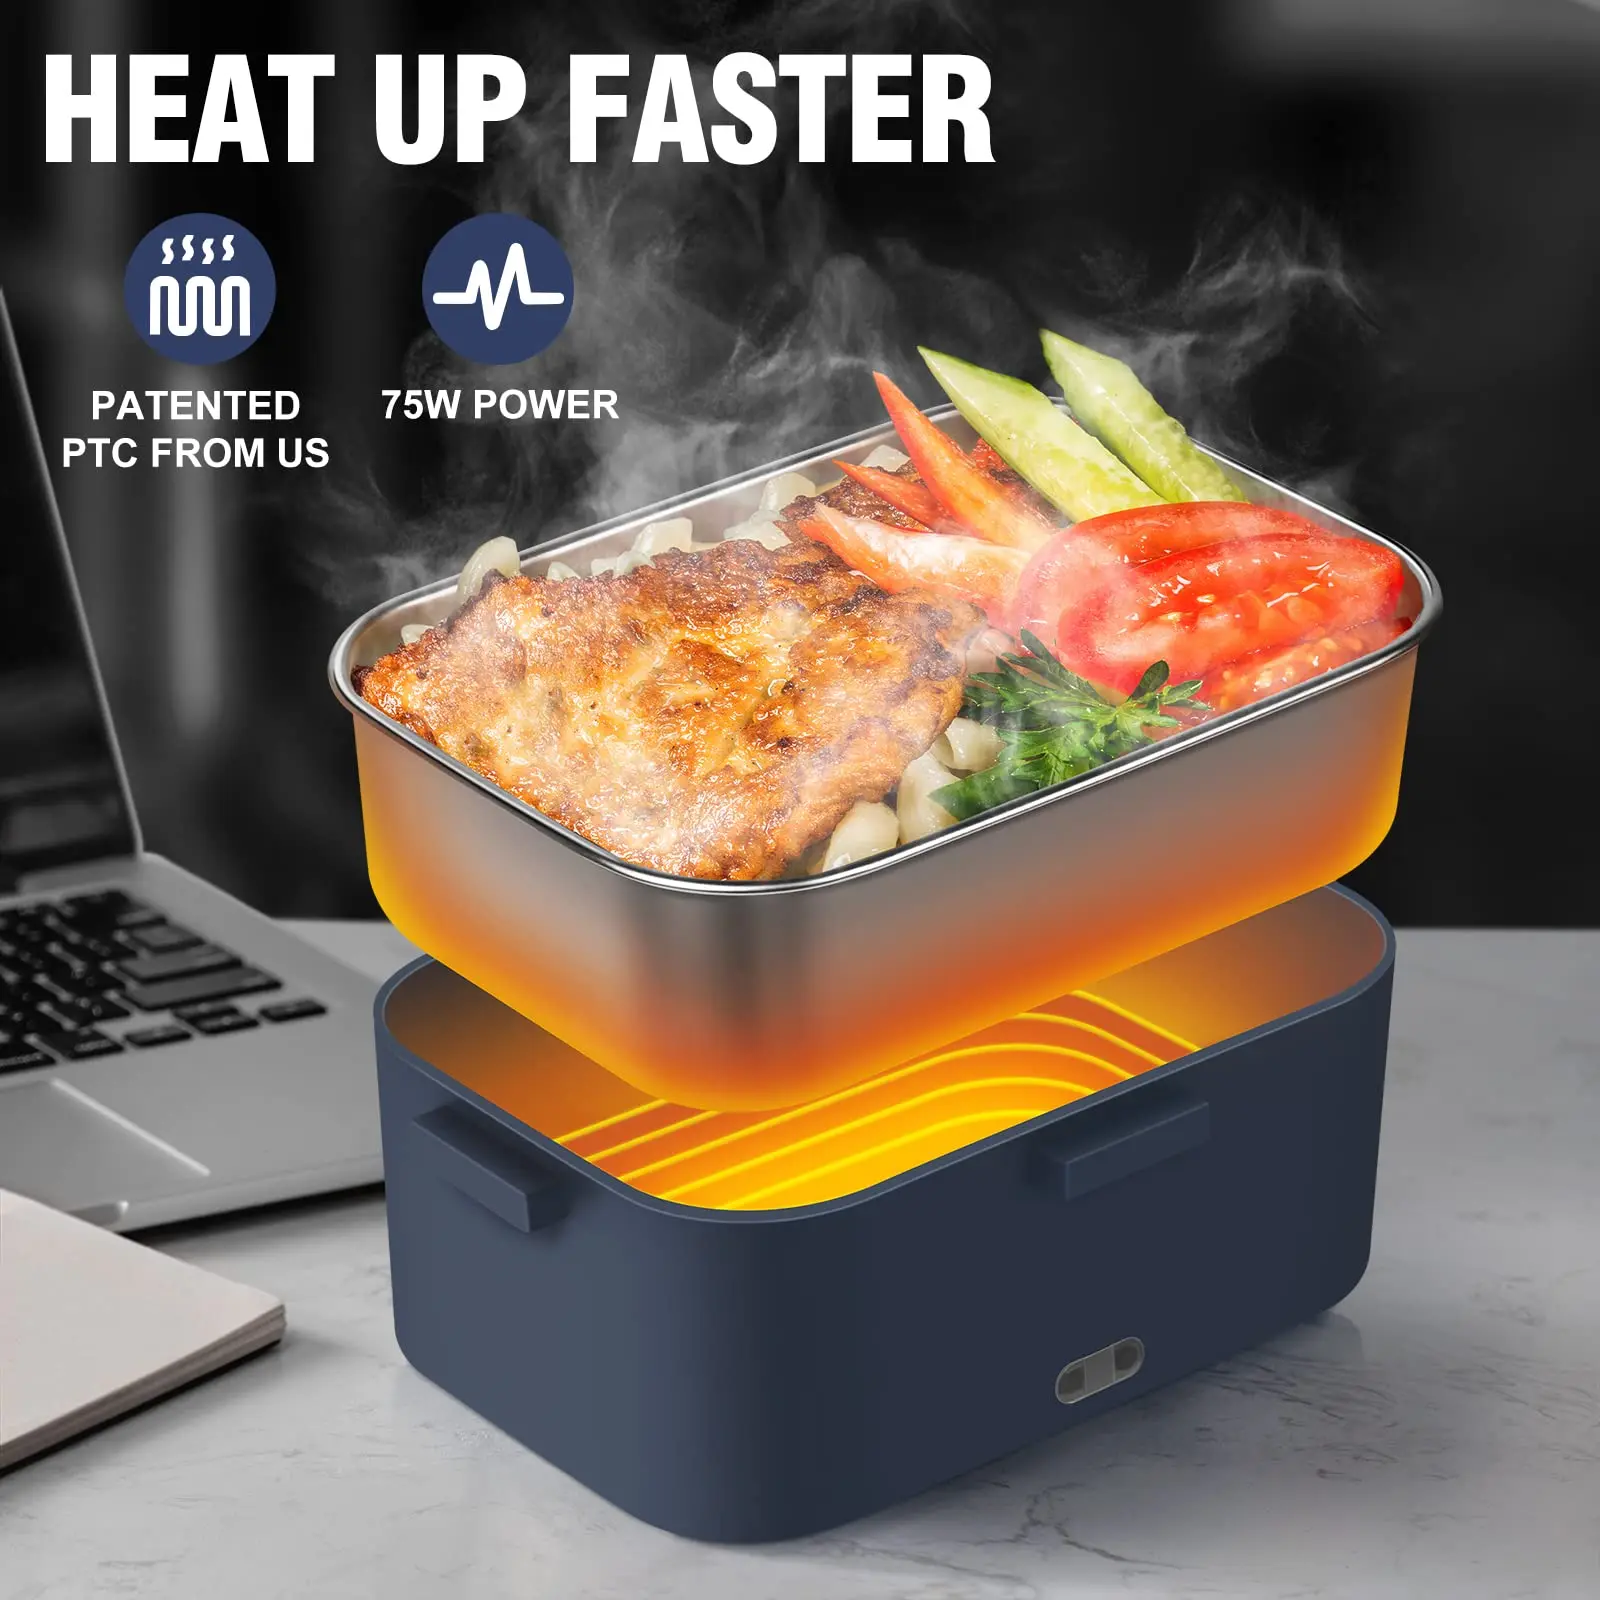 https://ae01.alicdn.com/kf/Sd822bbd6b64d45859ebf0b677195ab26z/1-8L-Electric-Lunch-Box-Food-Heater-High-Power-75W-Luncheaze-2-in-1-Portable-Heated.jpg